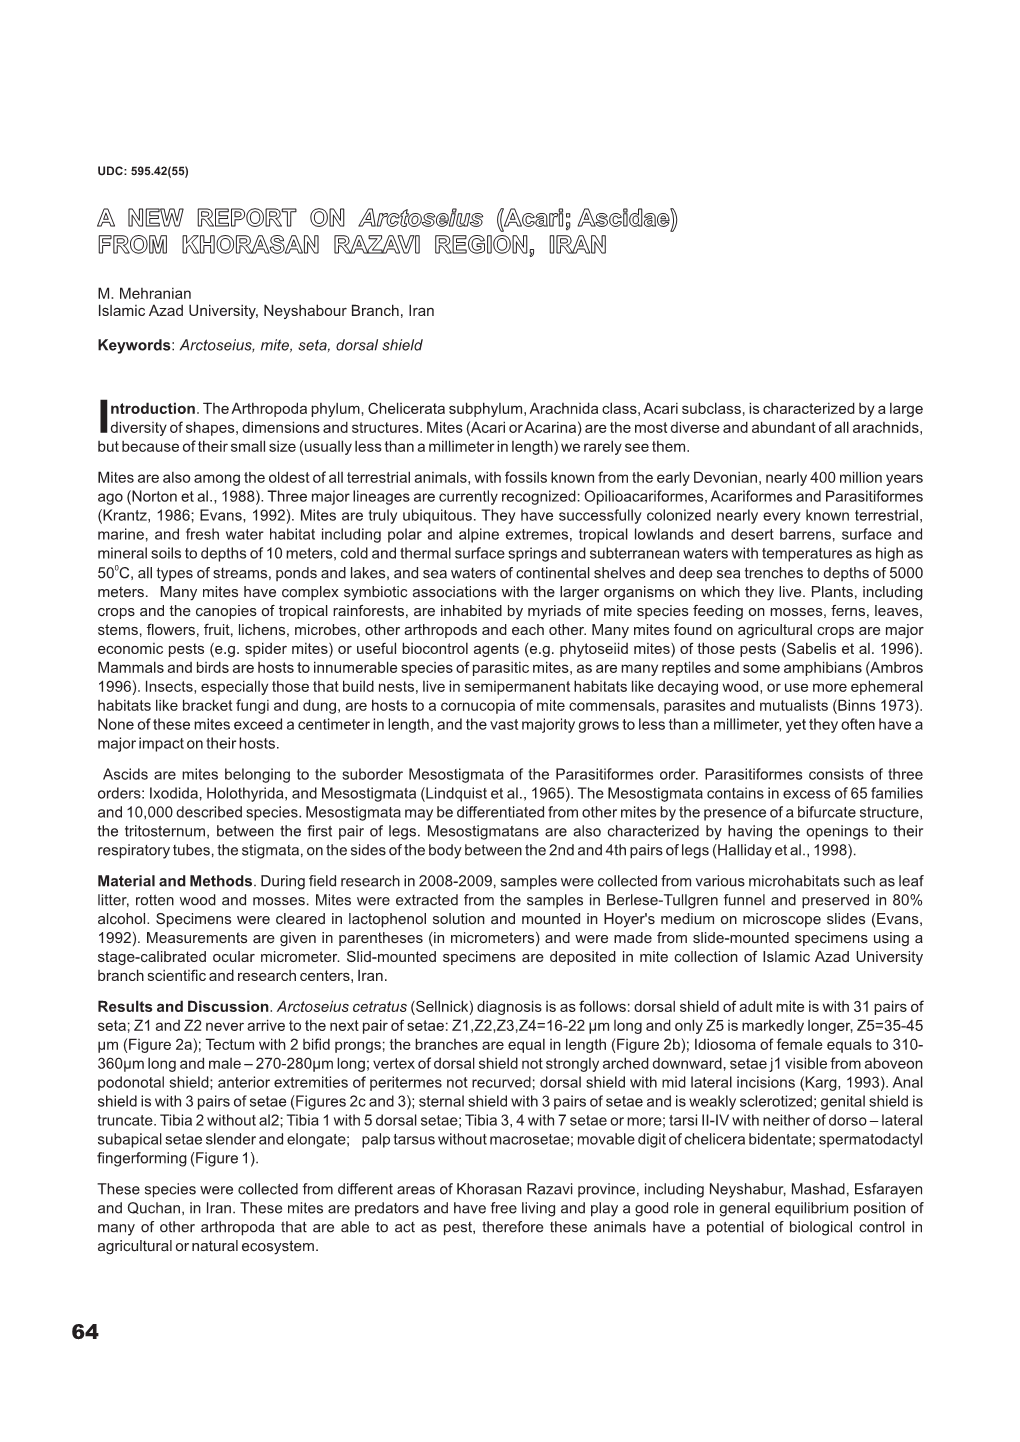 A NEW REPORT on Arctoseius (Acari; Ascidae) from KHORASAN RAZAVI REGION, IRAN